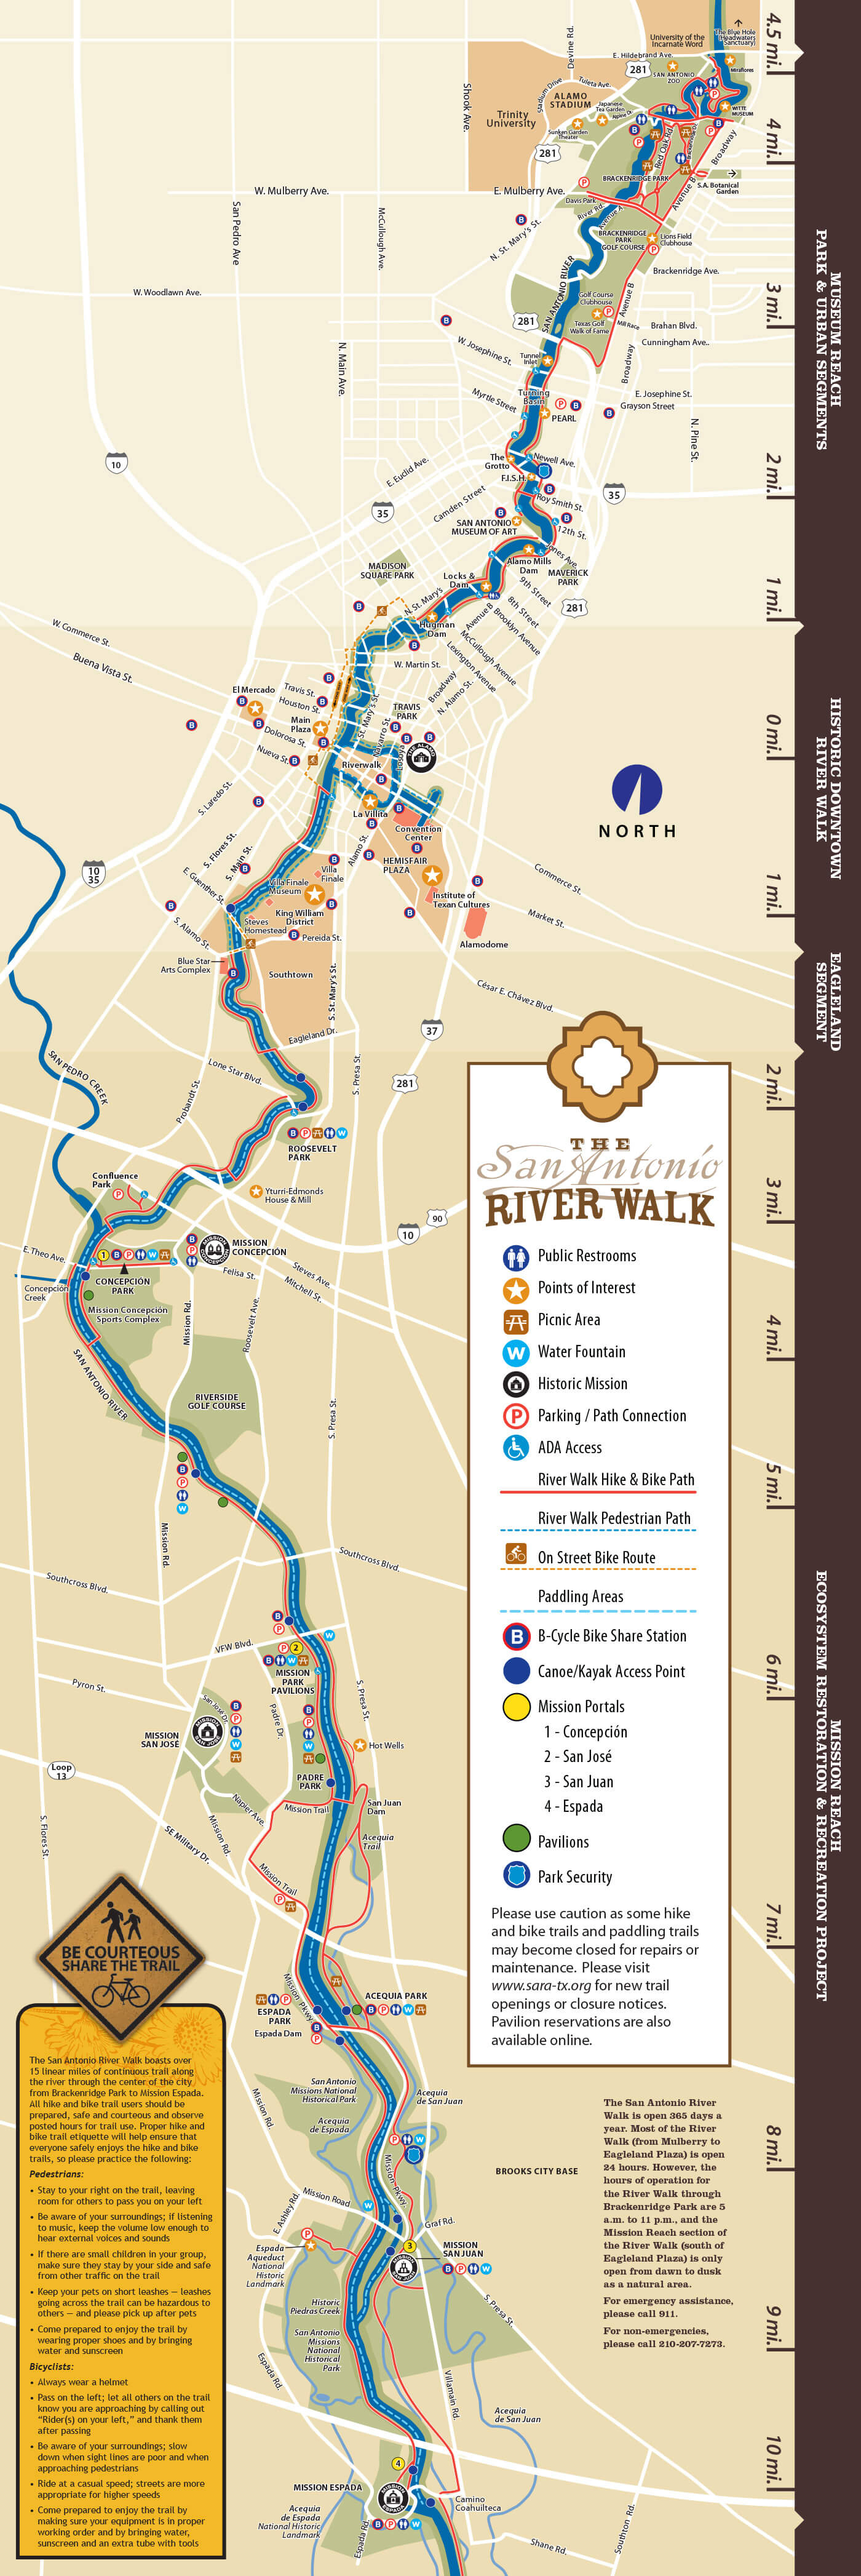 Map - Map Of Hotels Near Riverwalk In San Antonio Texas